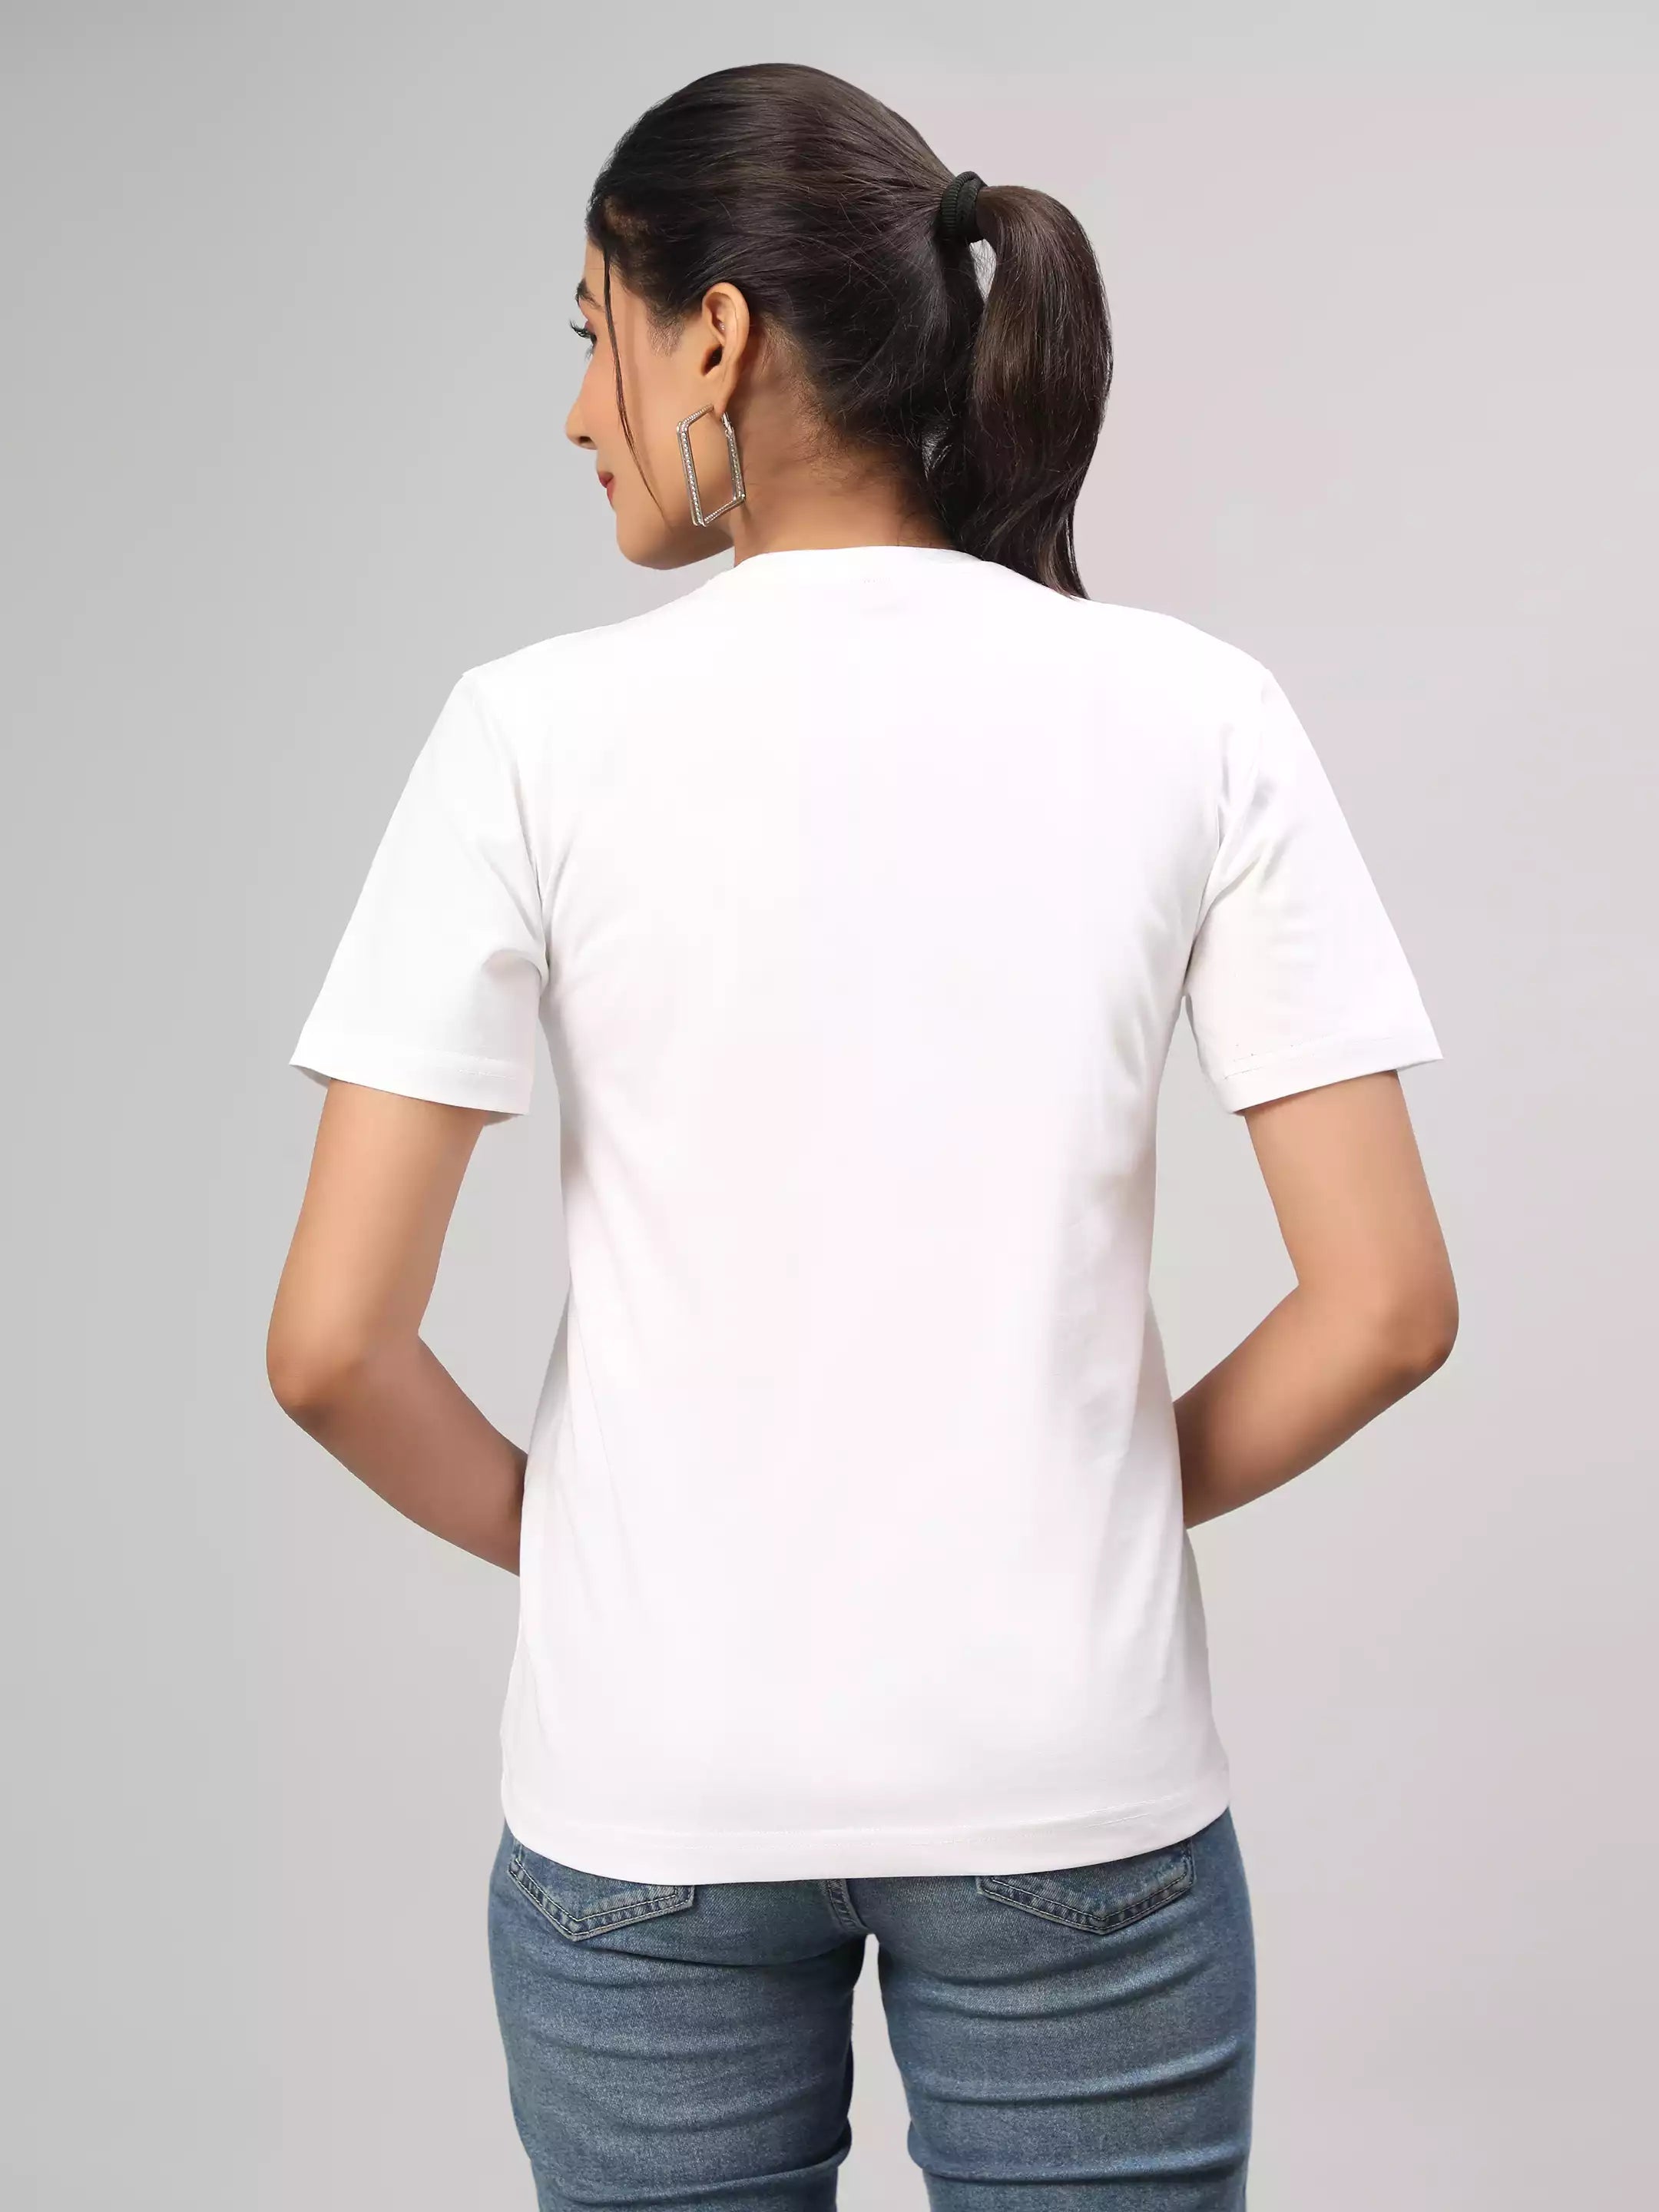 Ninja - Sukhiaatma Unisex Graphic Printed White T-shirt